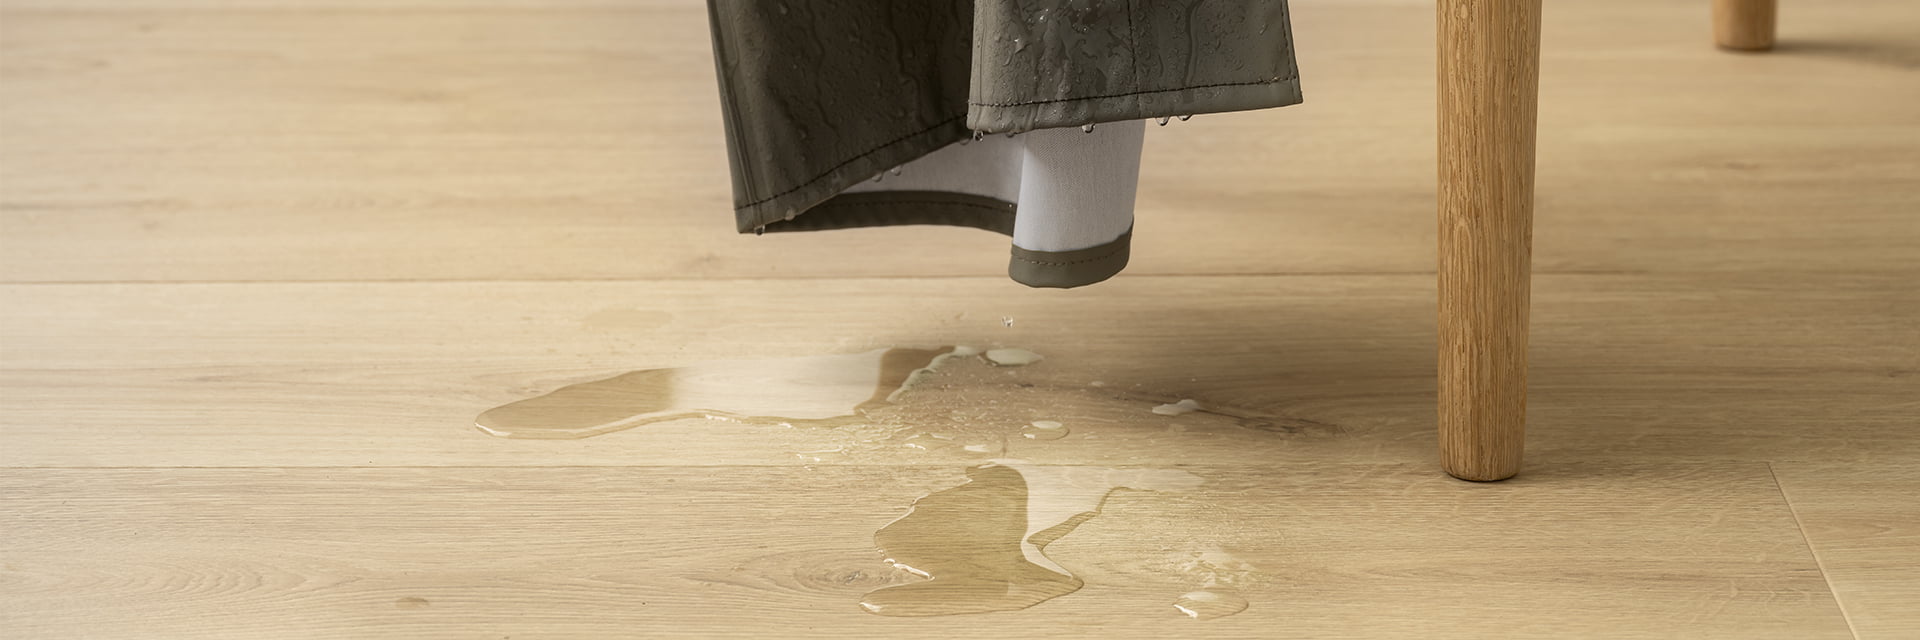 How to Clean Laminate Wood Floors